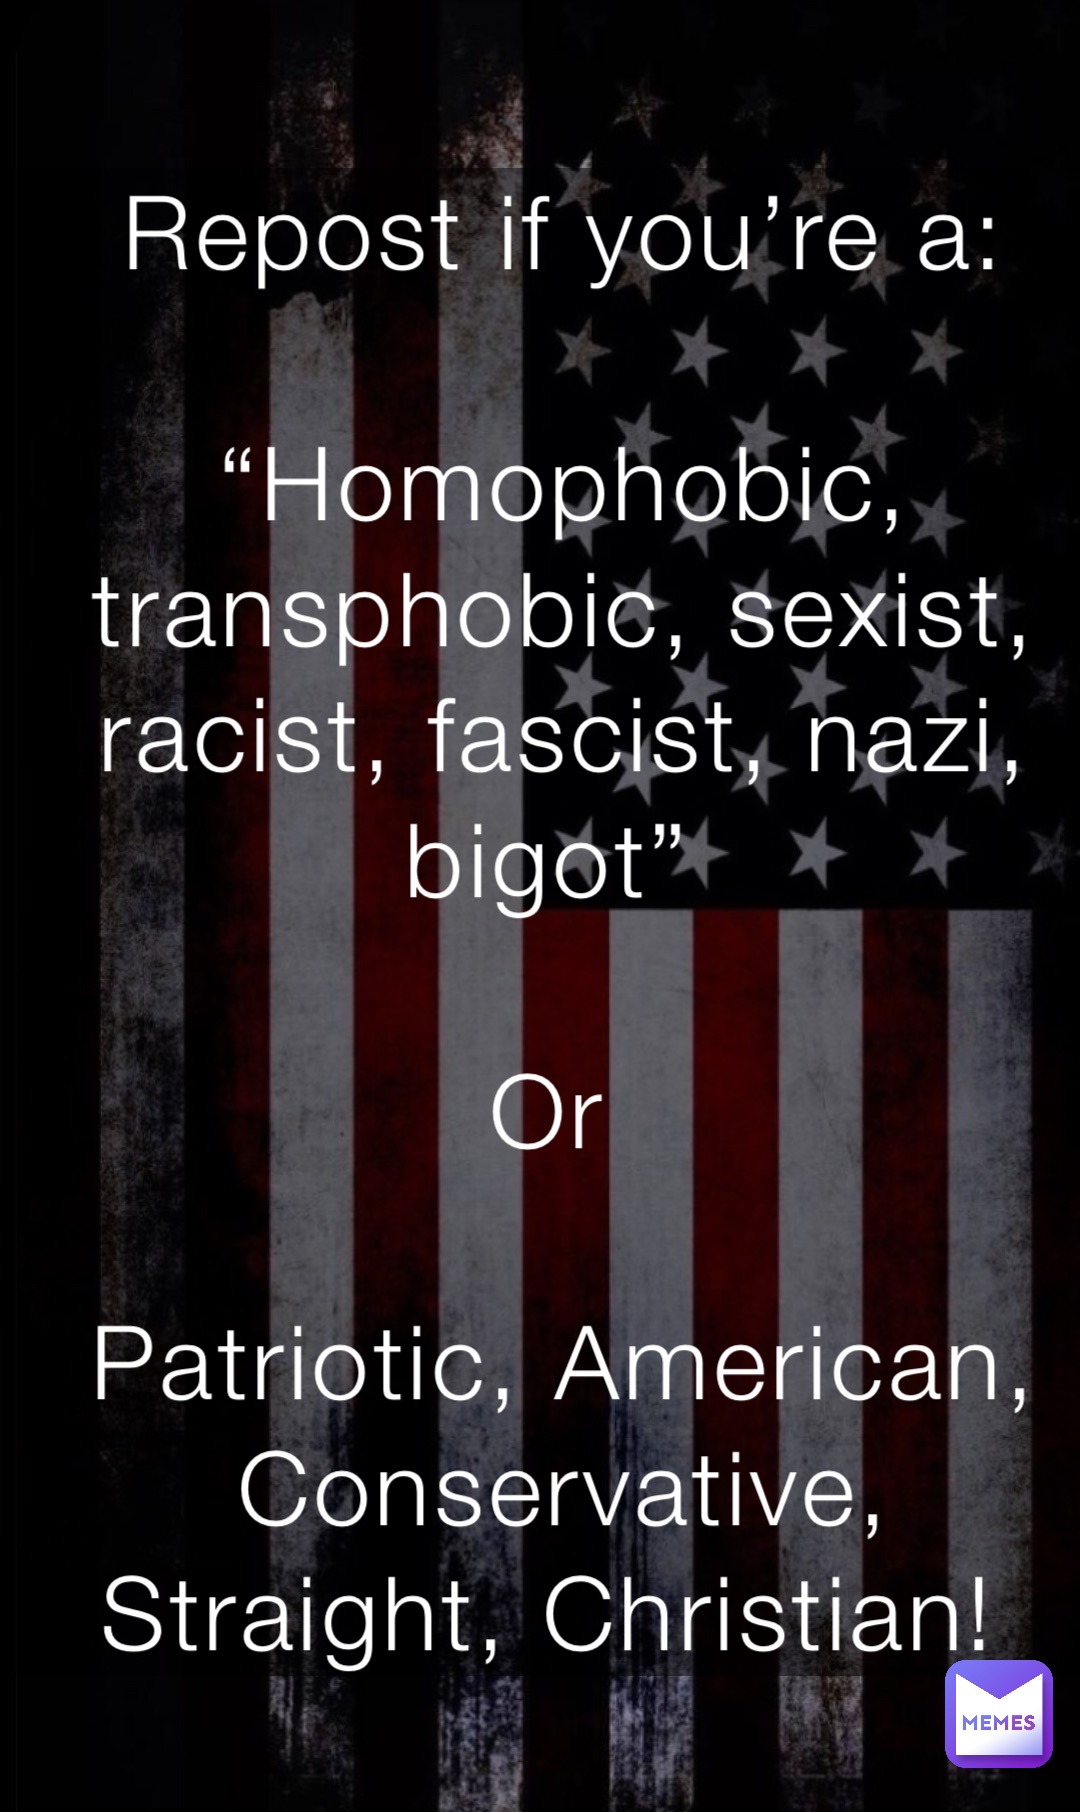 Repost if you’re a: 

“Homophobic, transphobic, sexist, racist, fascist, nazi, bigot”

Or

Patriotic, American, Conservative, Straight, Christian!